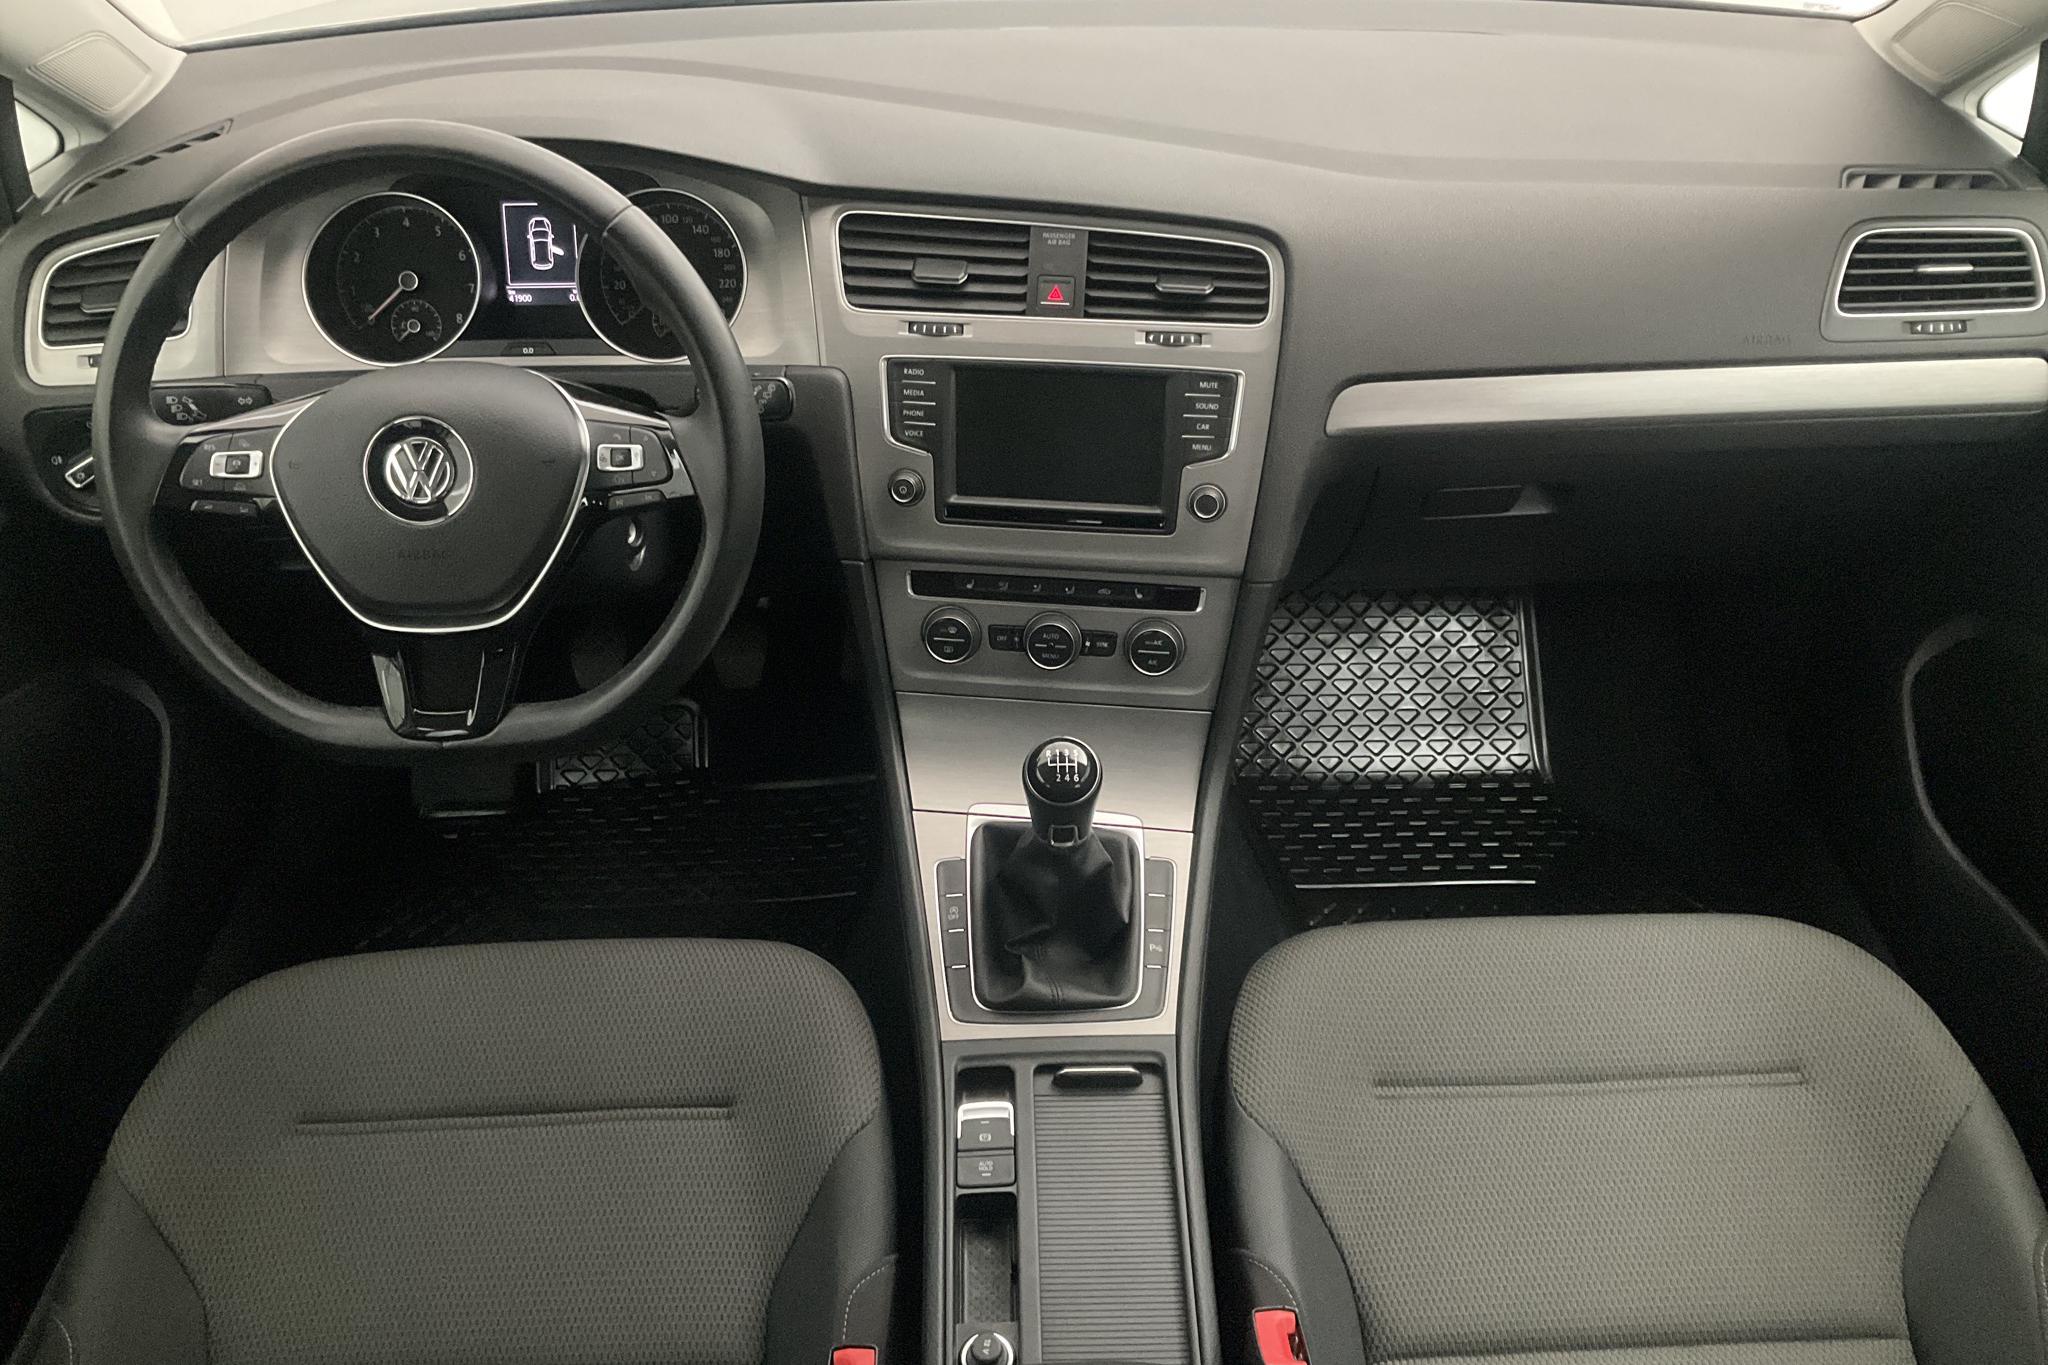 VW Golf VII 1.2 TSI 5dr (110hk) - 4 191 mil - Manuell - silver - 2017